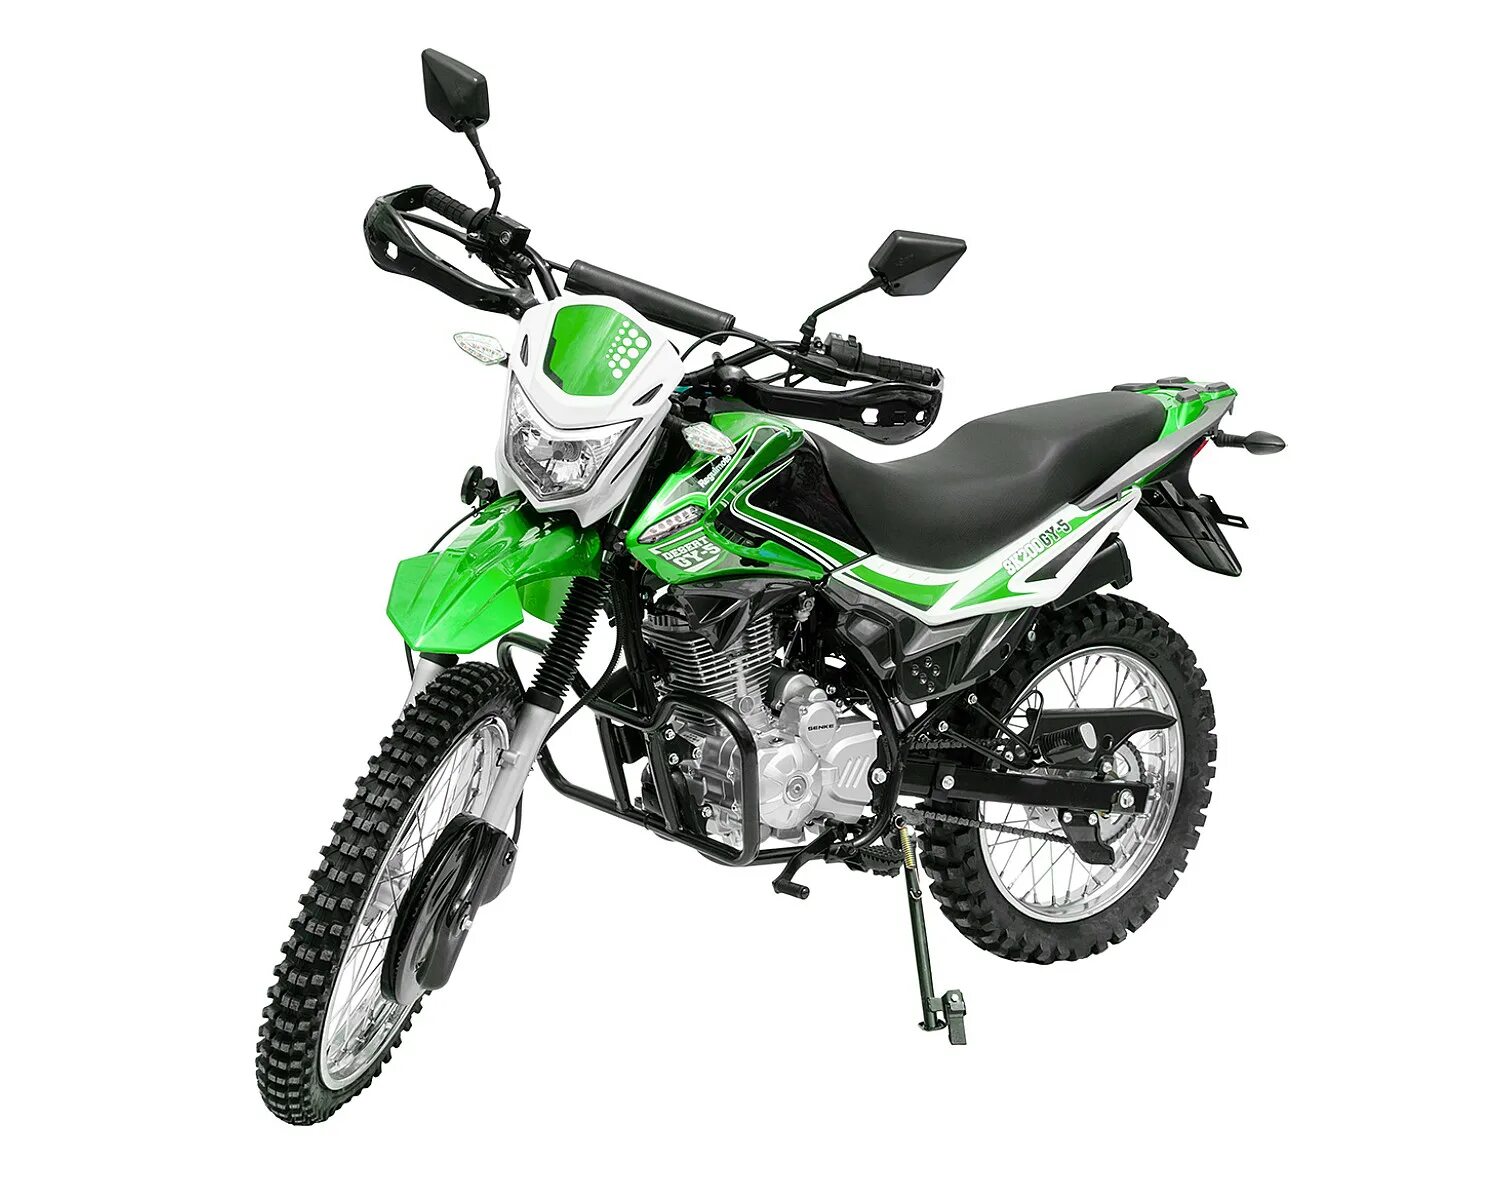 Регулмото файв. Мотоцикл Regulmoto sk200. Regulmoto sk200gy-5 зеленый.